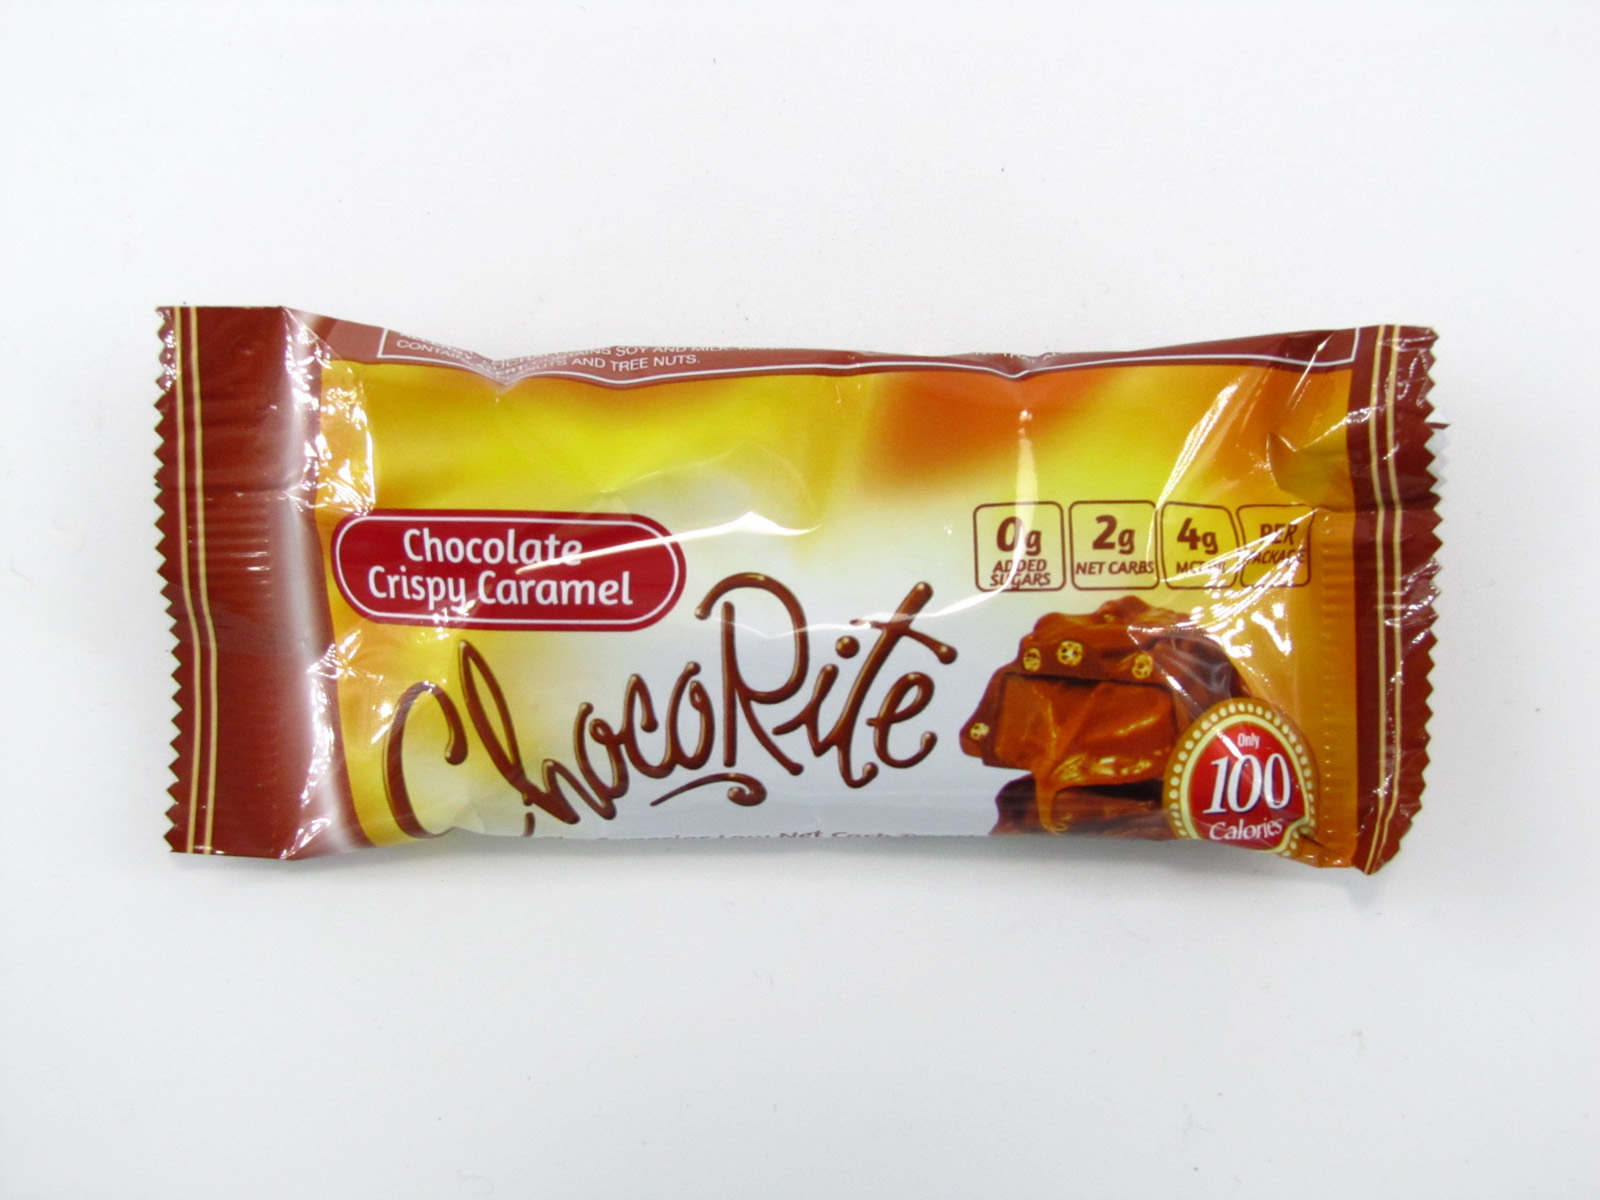 Chocorite Bar (32g) - Chocolate Crispy Caramel - front view